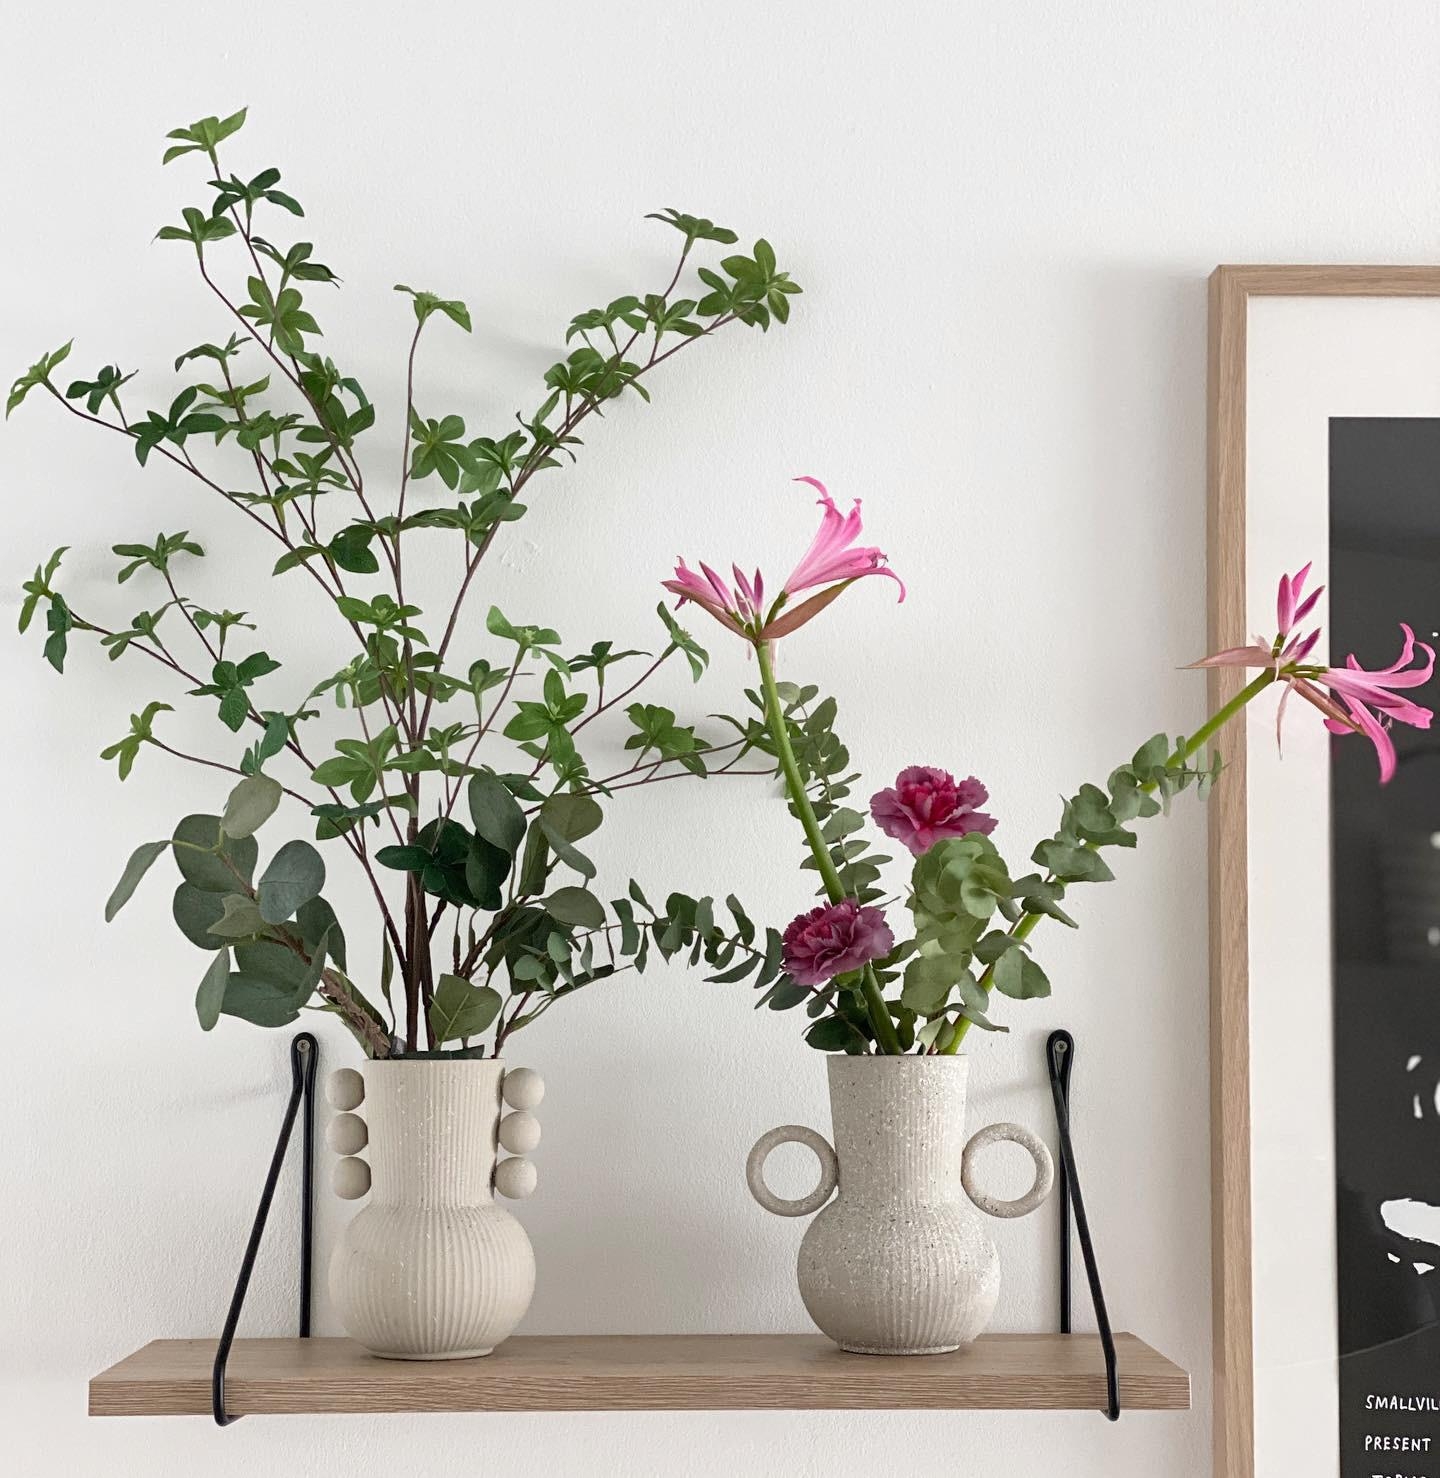 Friday Flowers in DIY Vasen🌺🌿 #DIY #upcycling #ikeahack #blumen #deko #wohnen #vasen #inspiration